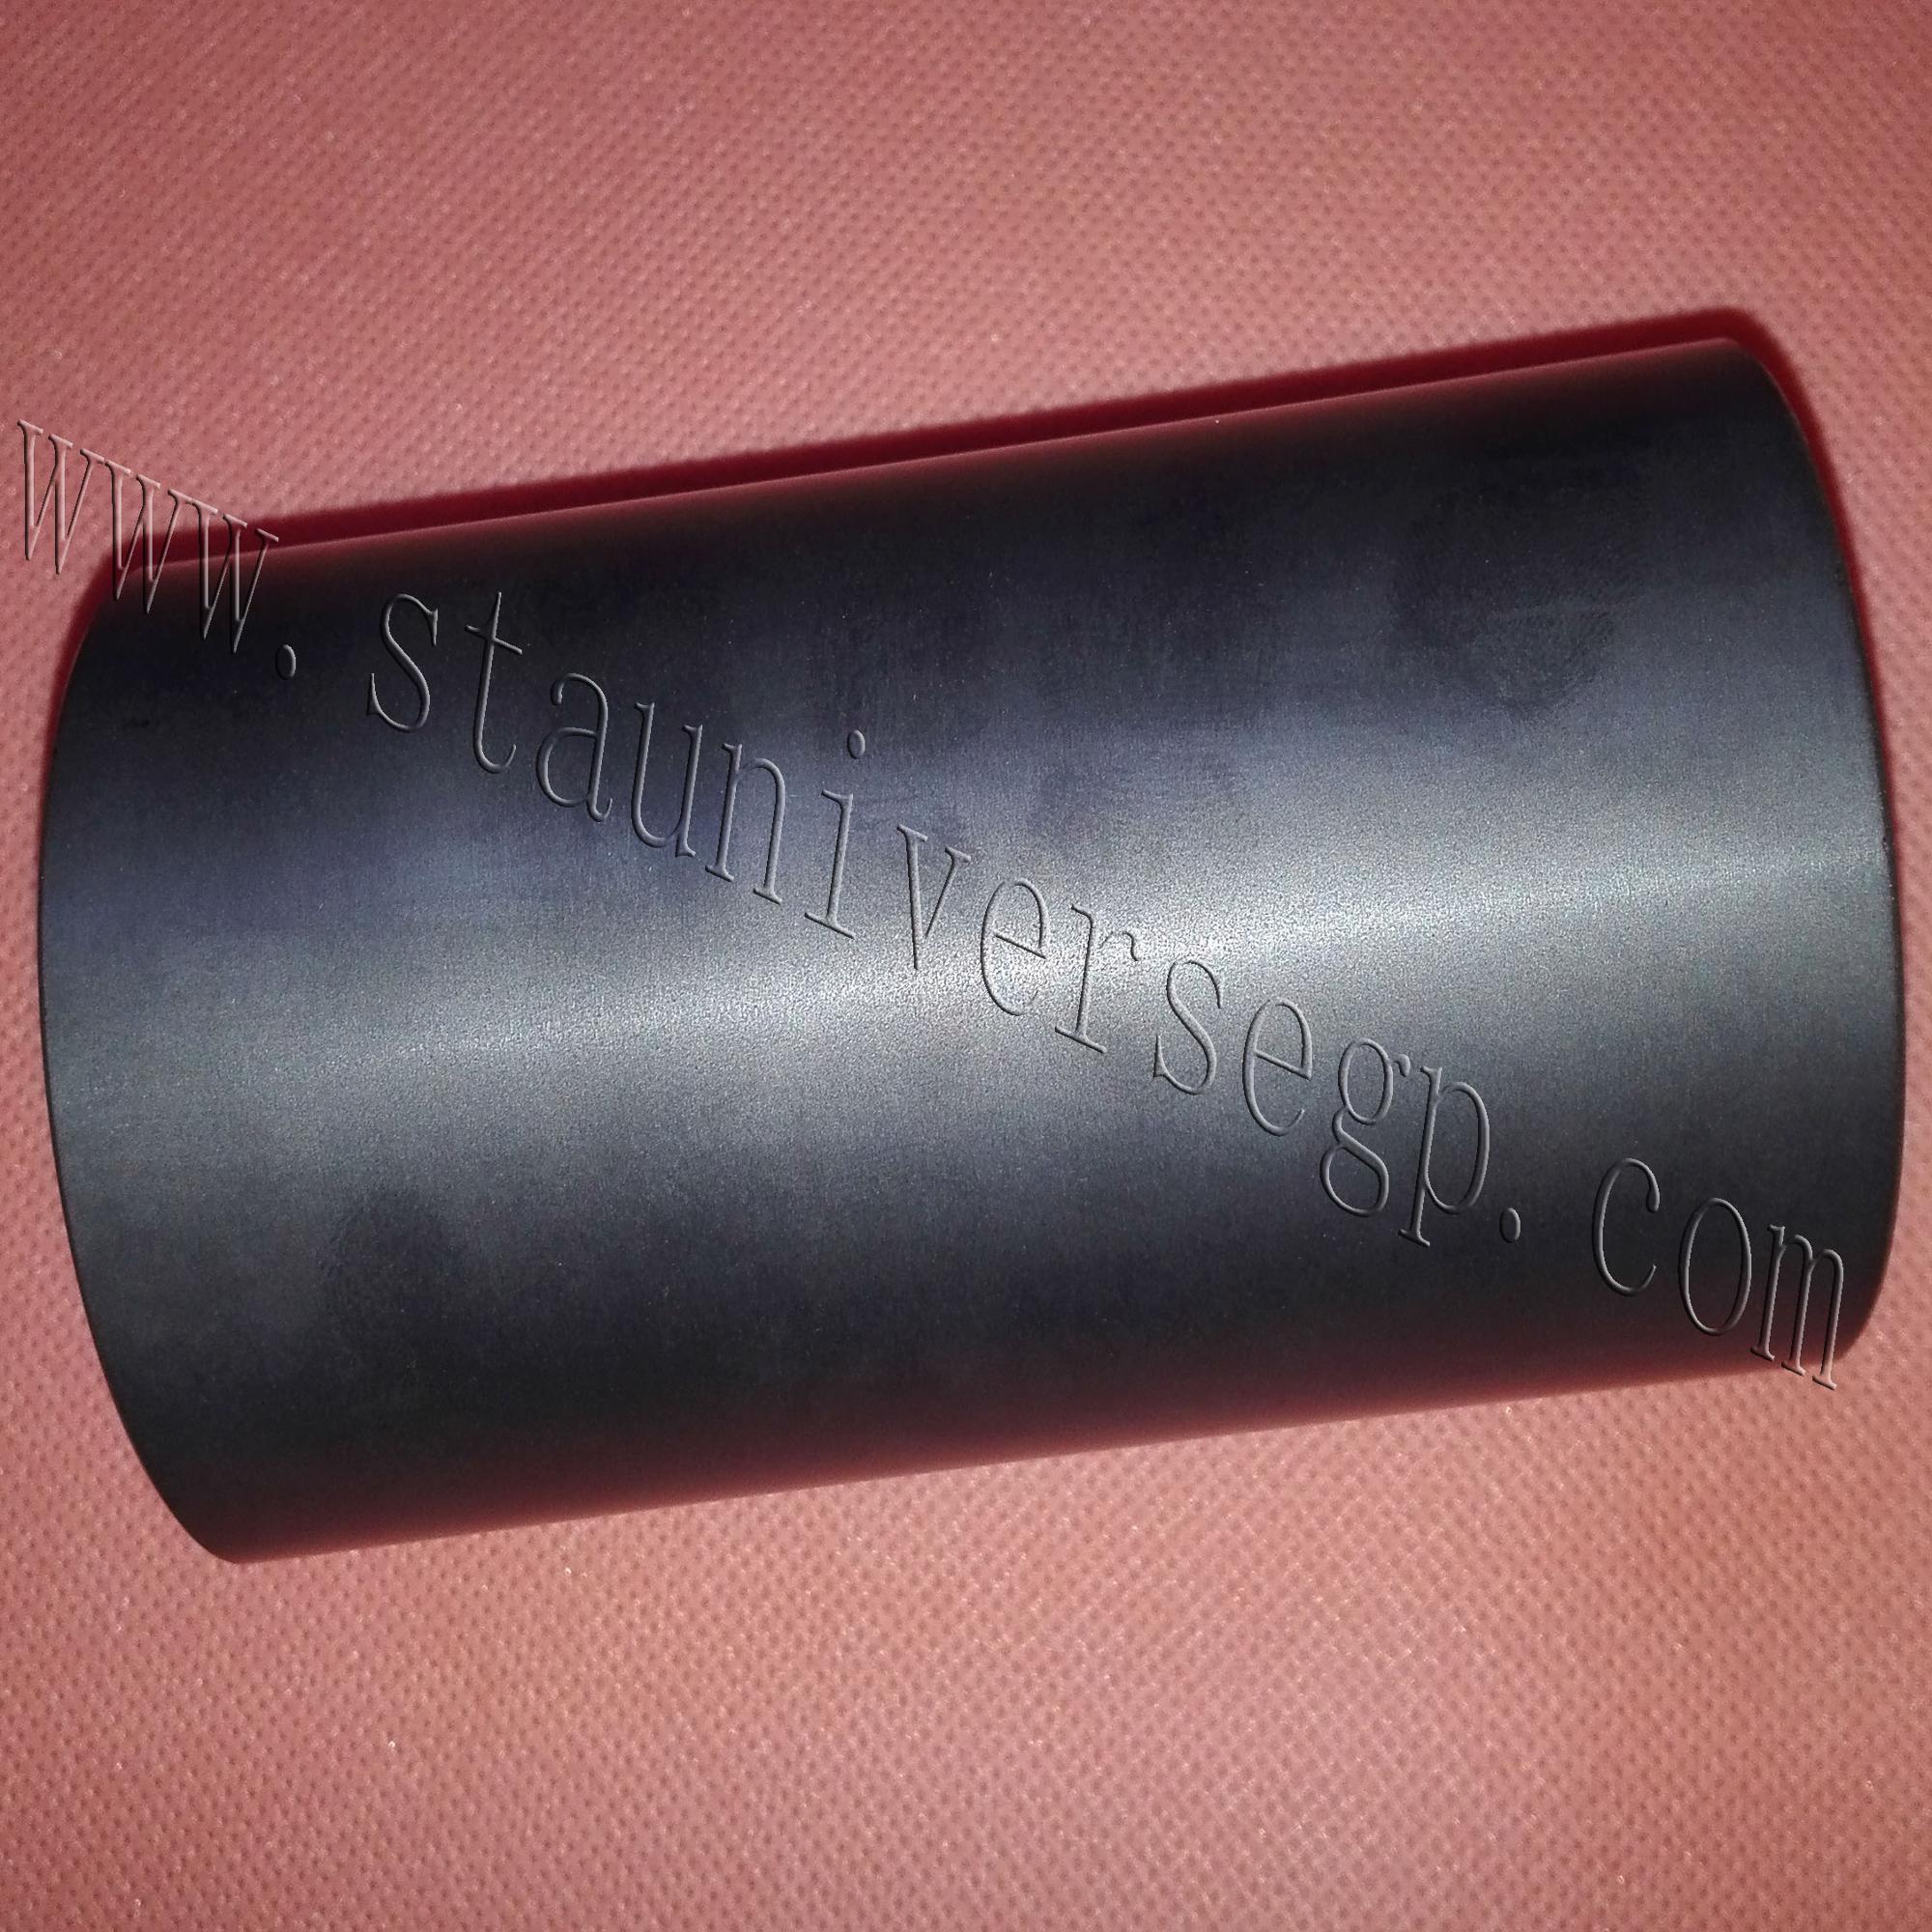 1.STA- Sintered Alpha sic tube/Silicon Carbide ring